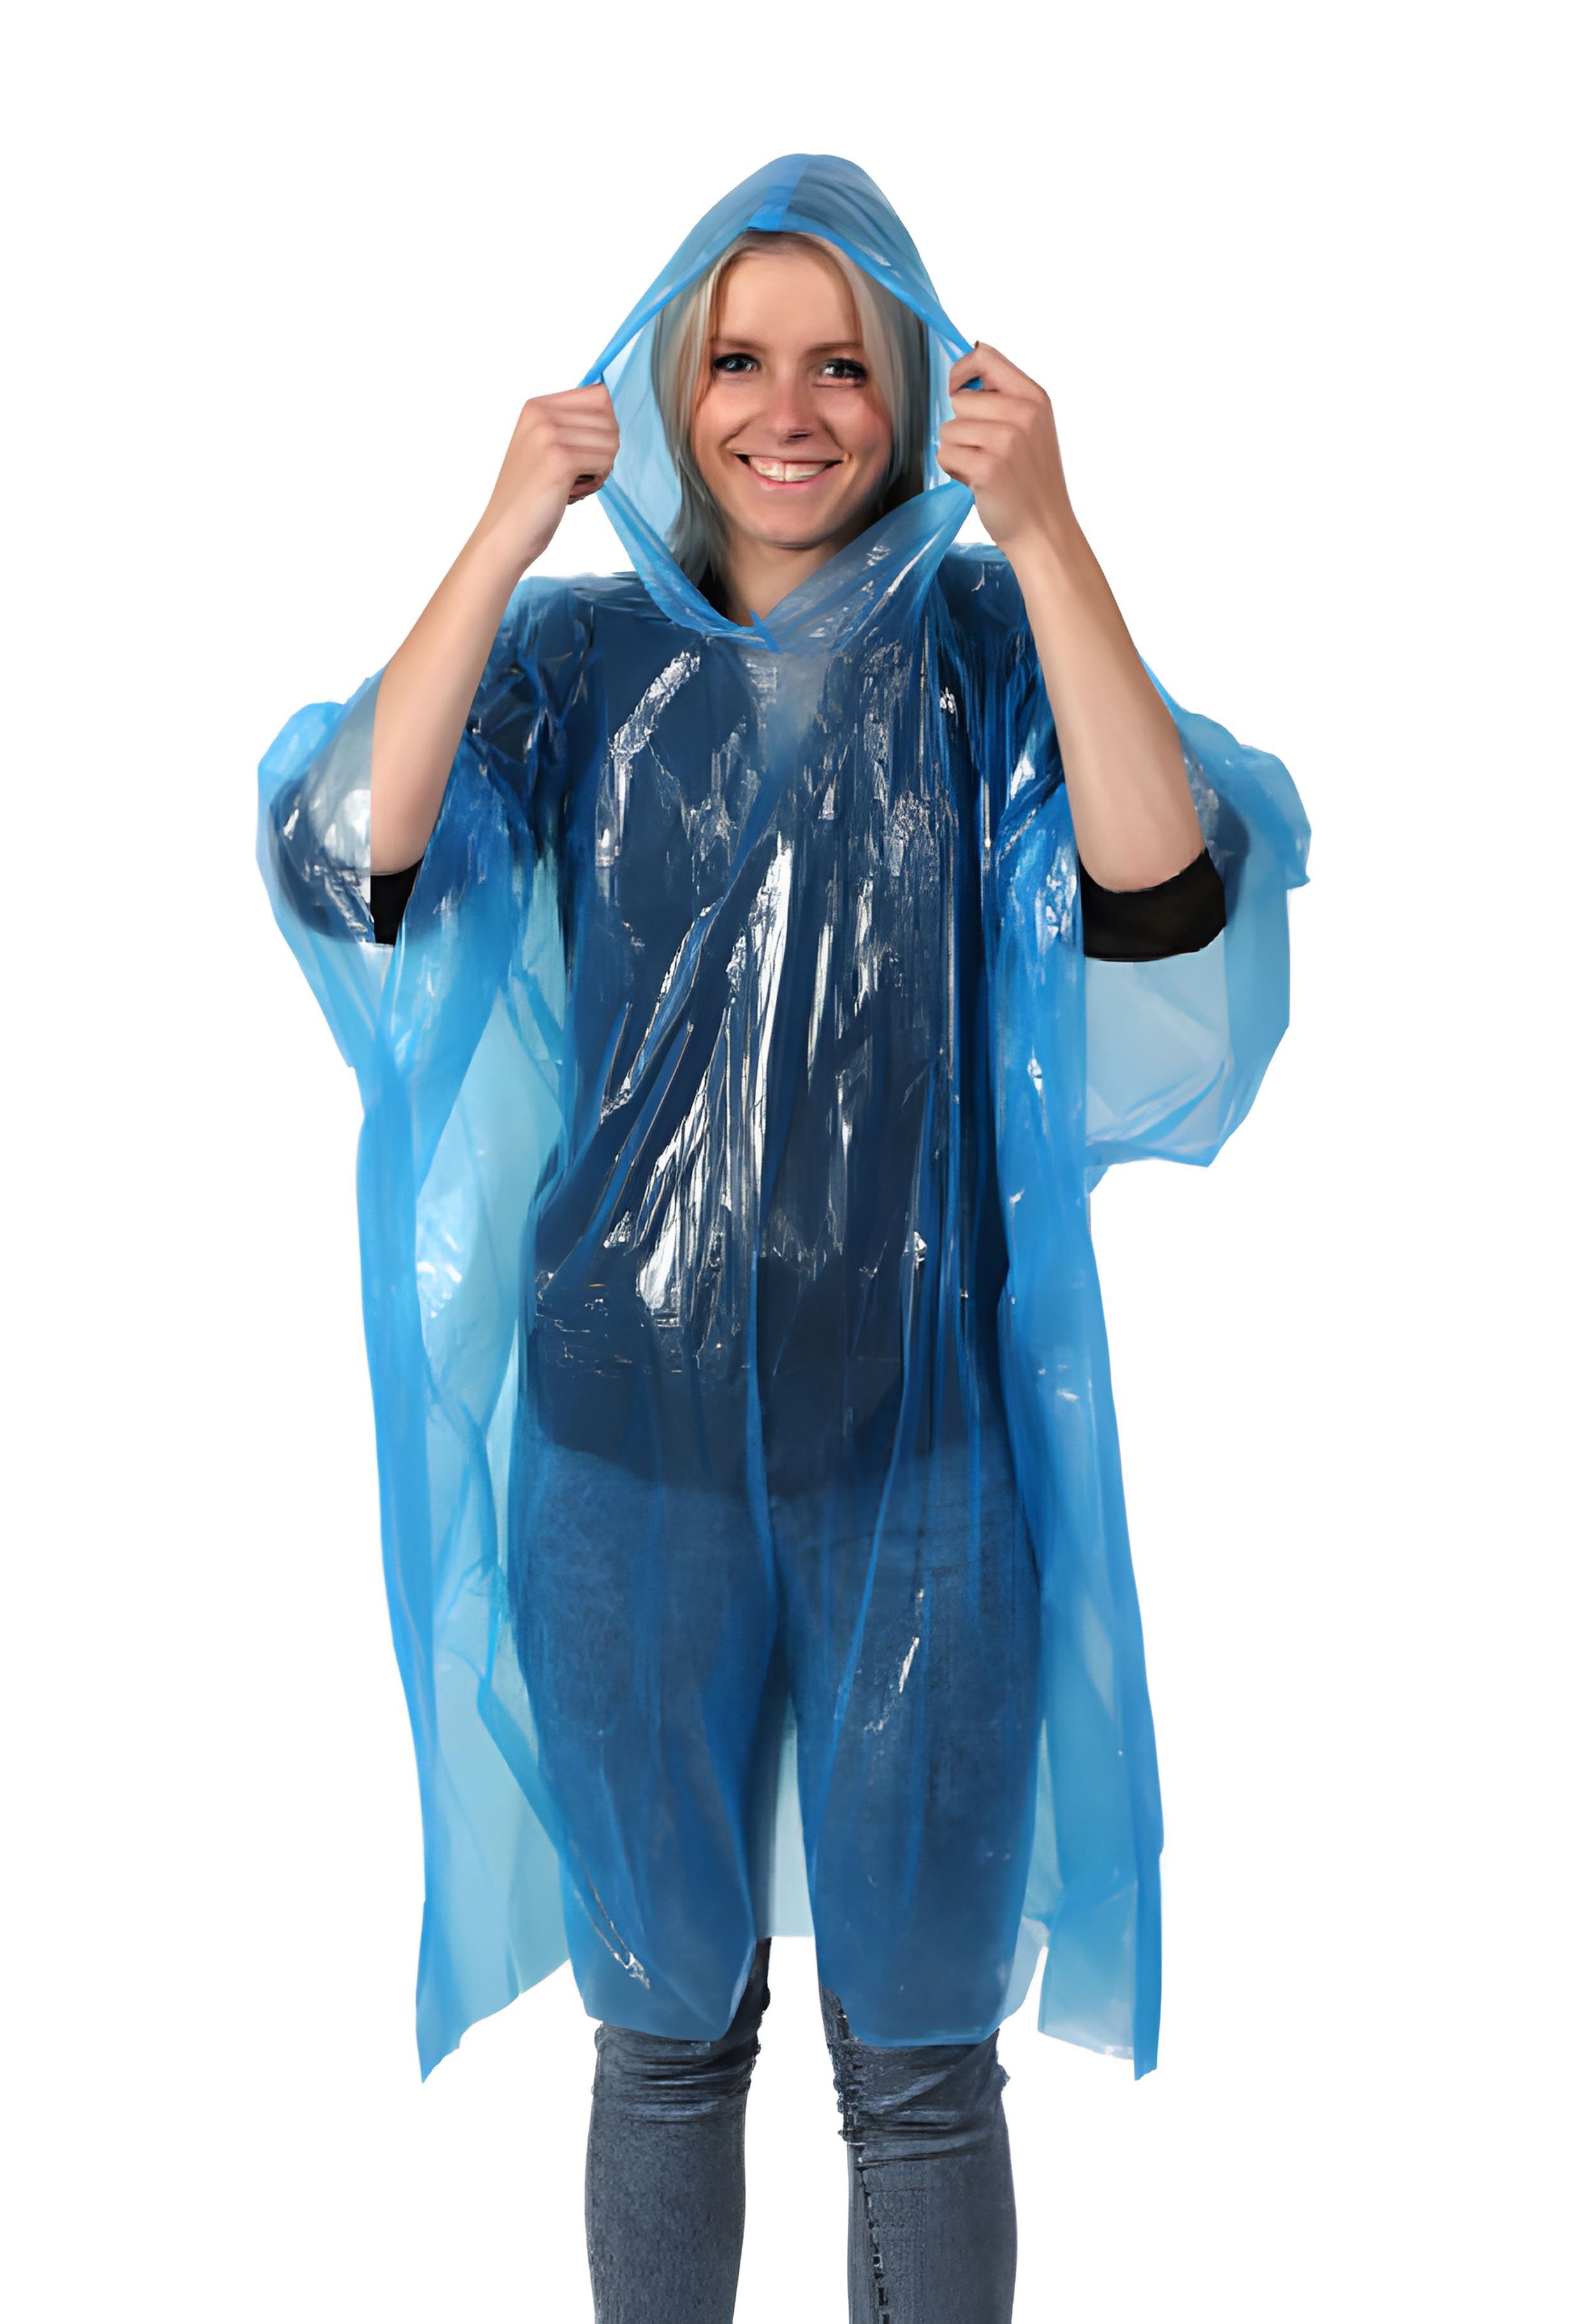 Regenjacke für den mit Notfall Blau-Transparent REGENPONCHO 52 Regenponcho Lifetime Regenschutz Regencape Unisex Universal-Größe Kapuze Poncho